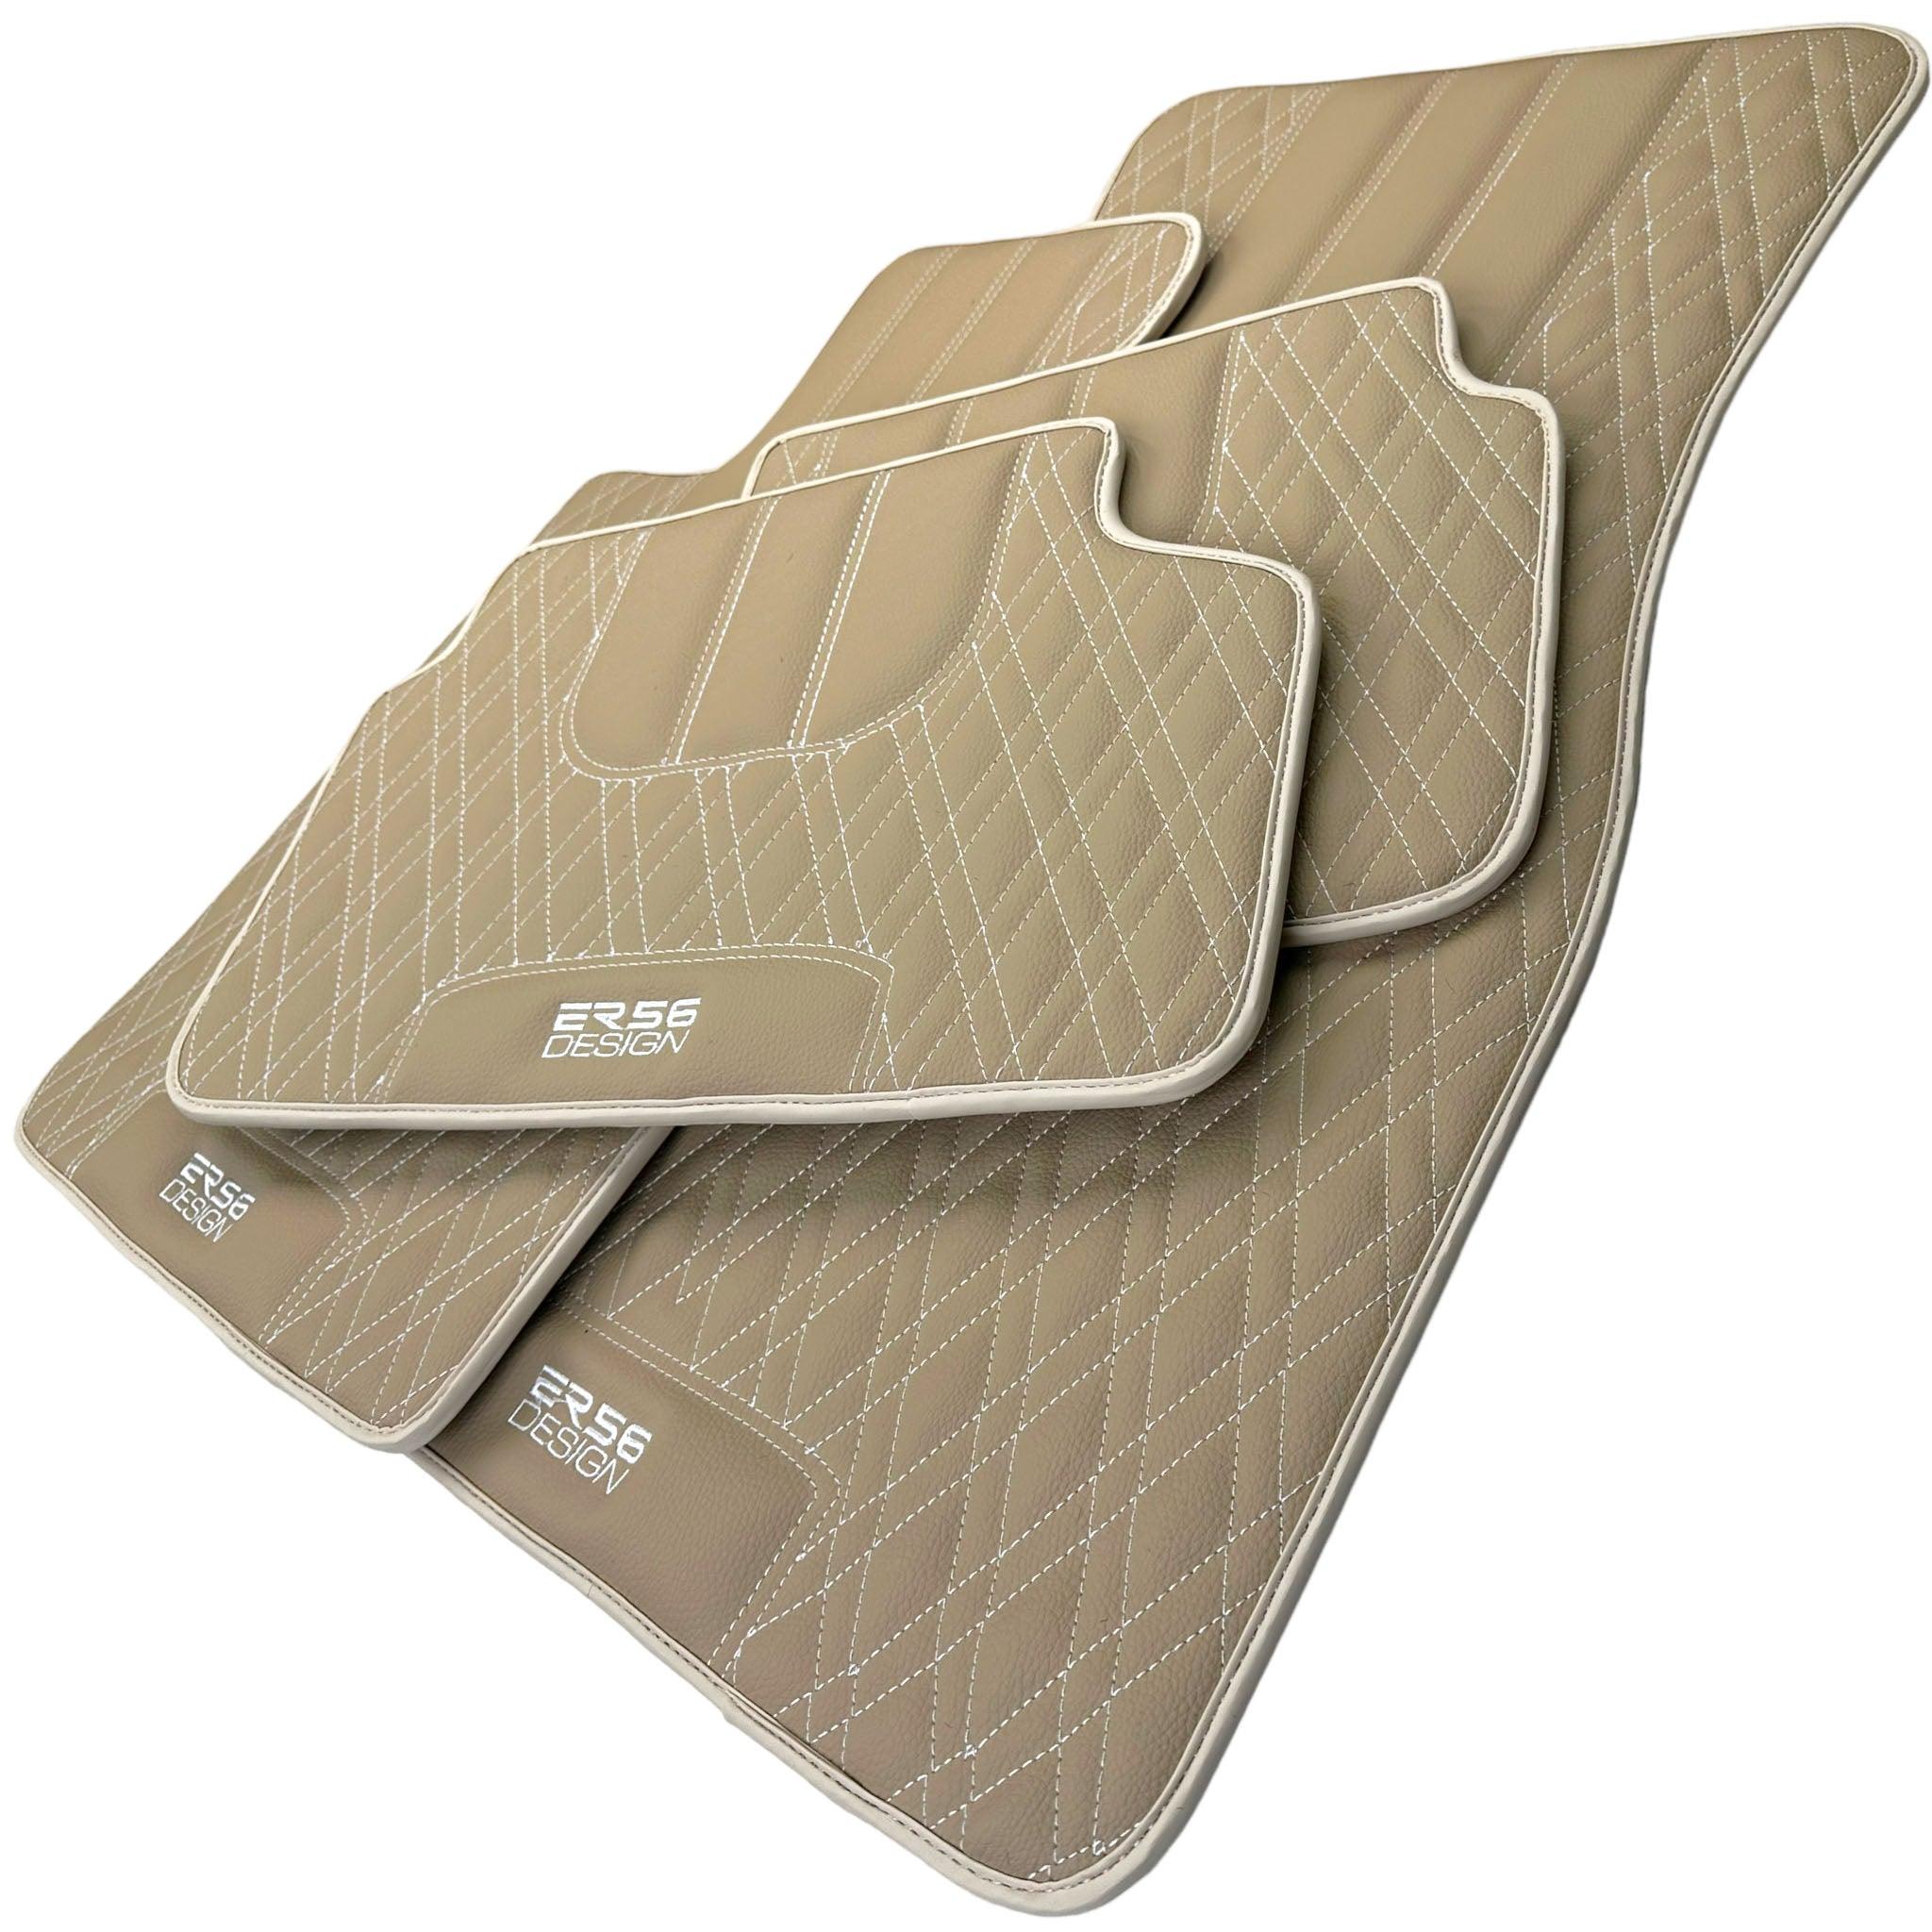 Beige Leather Floor Floor Mats For BMW 7 Series F02 | Fighter Jet Edition AutoWin Brand |Sky Blue Trim